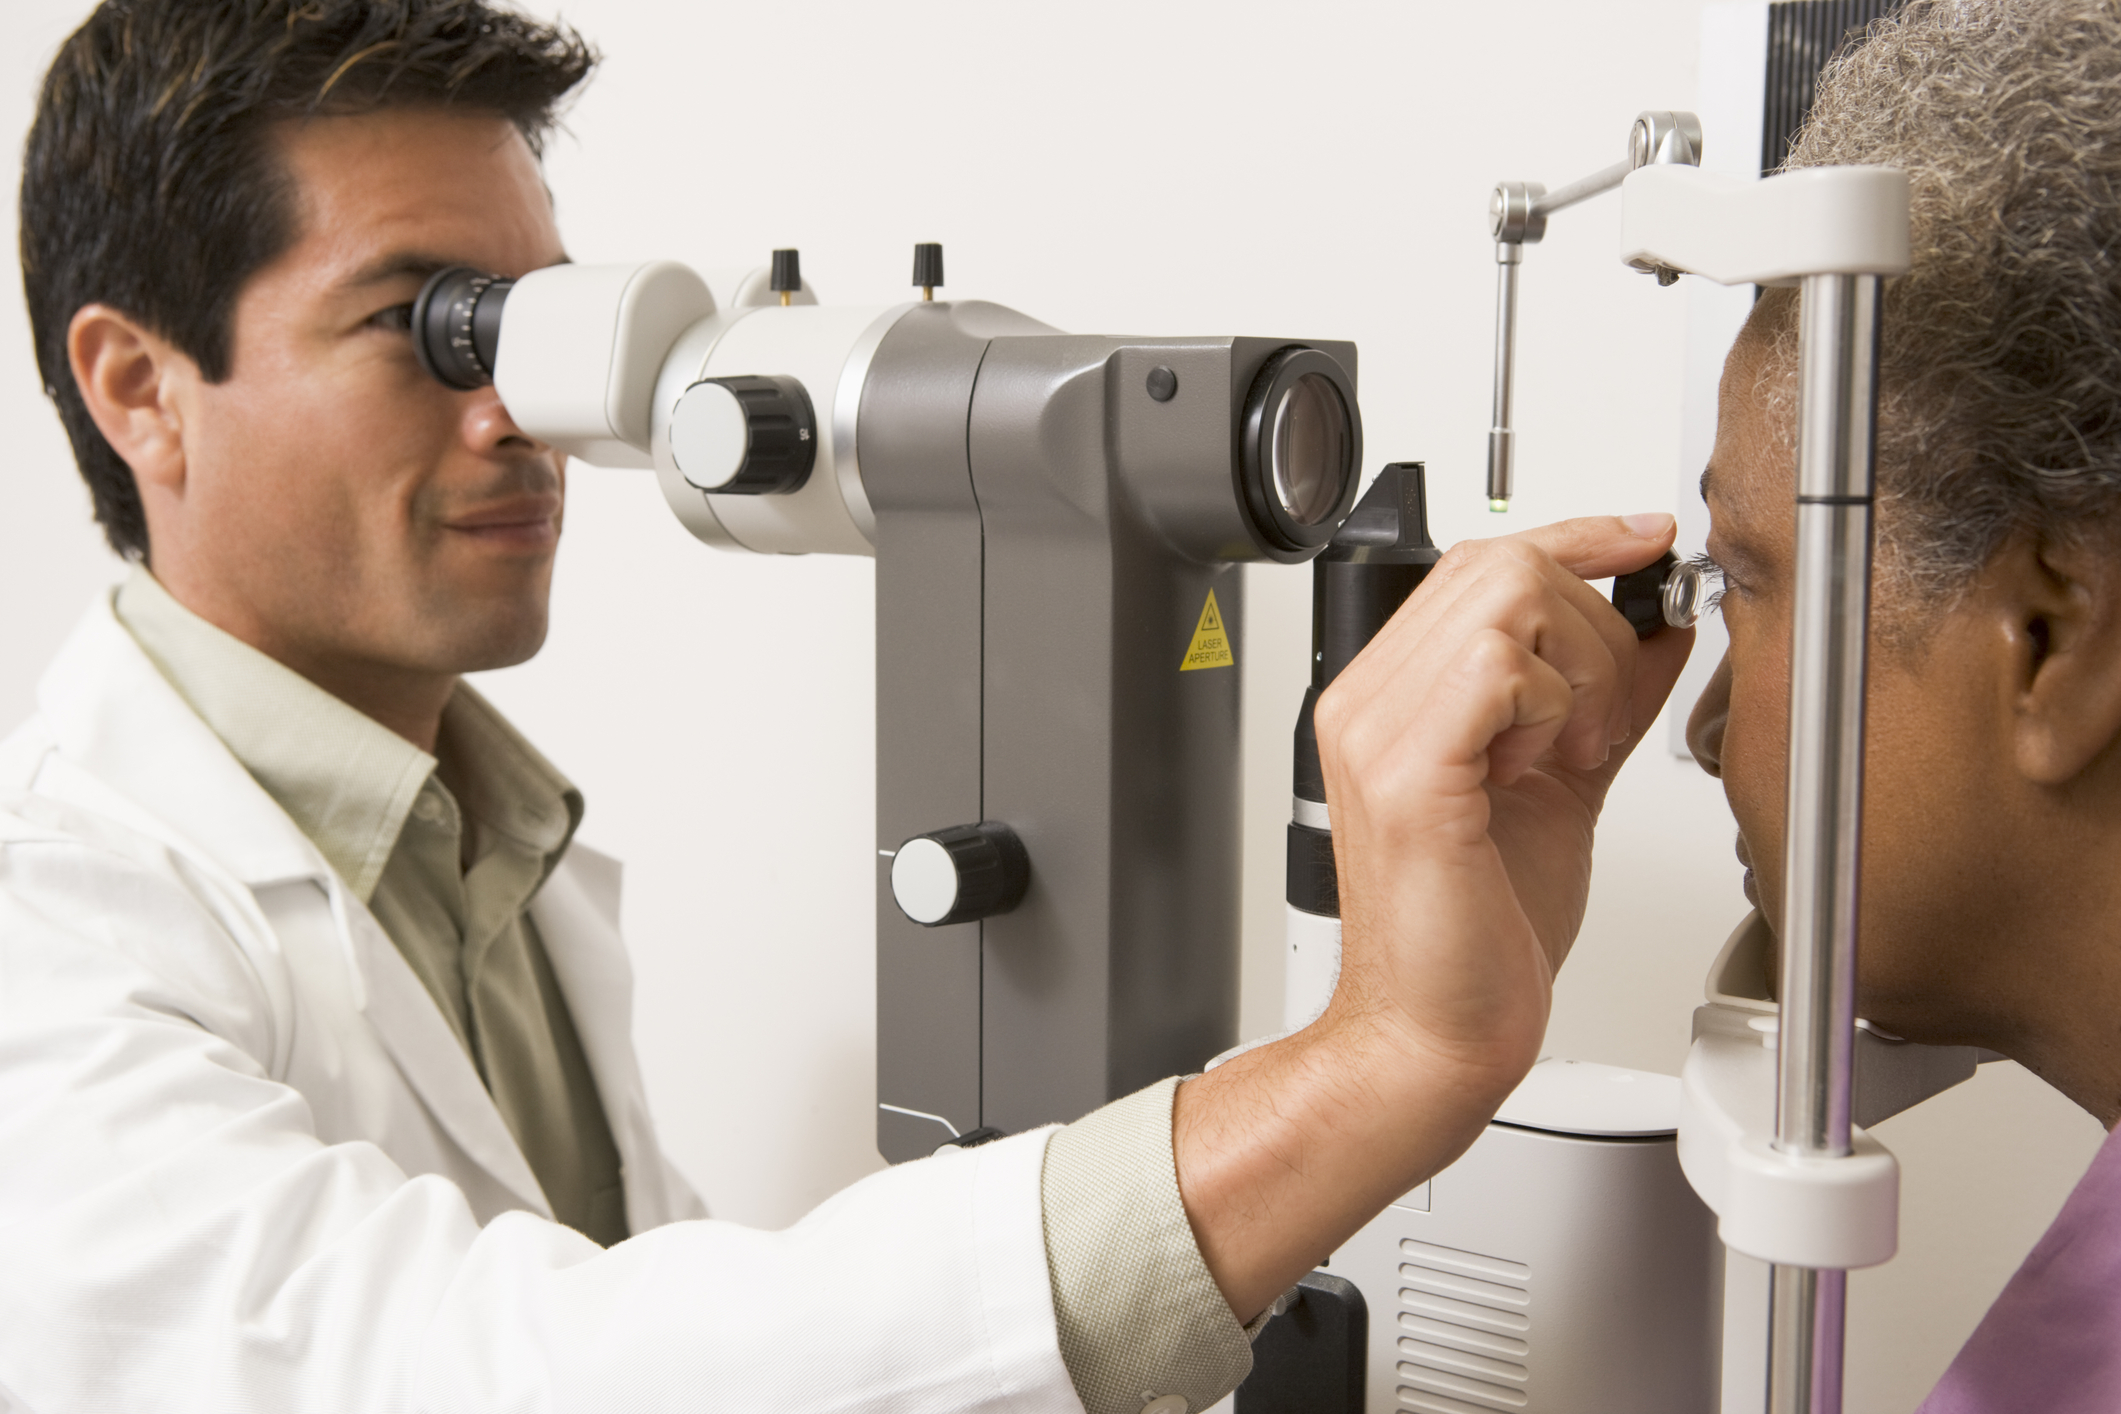 eye doctor using equipment to examine patient's eye